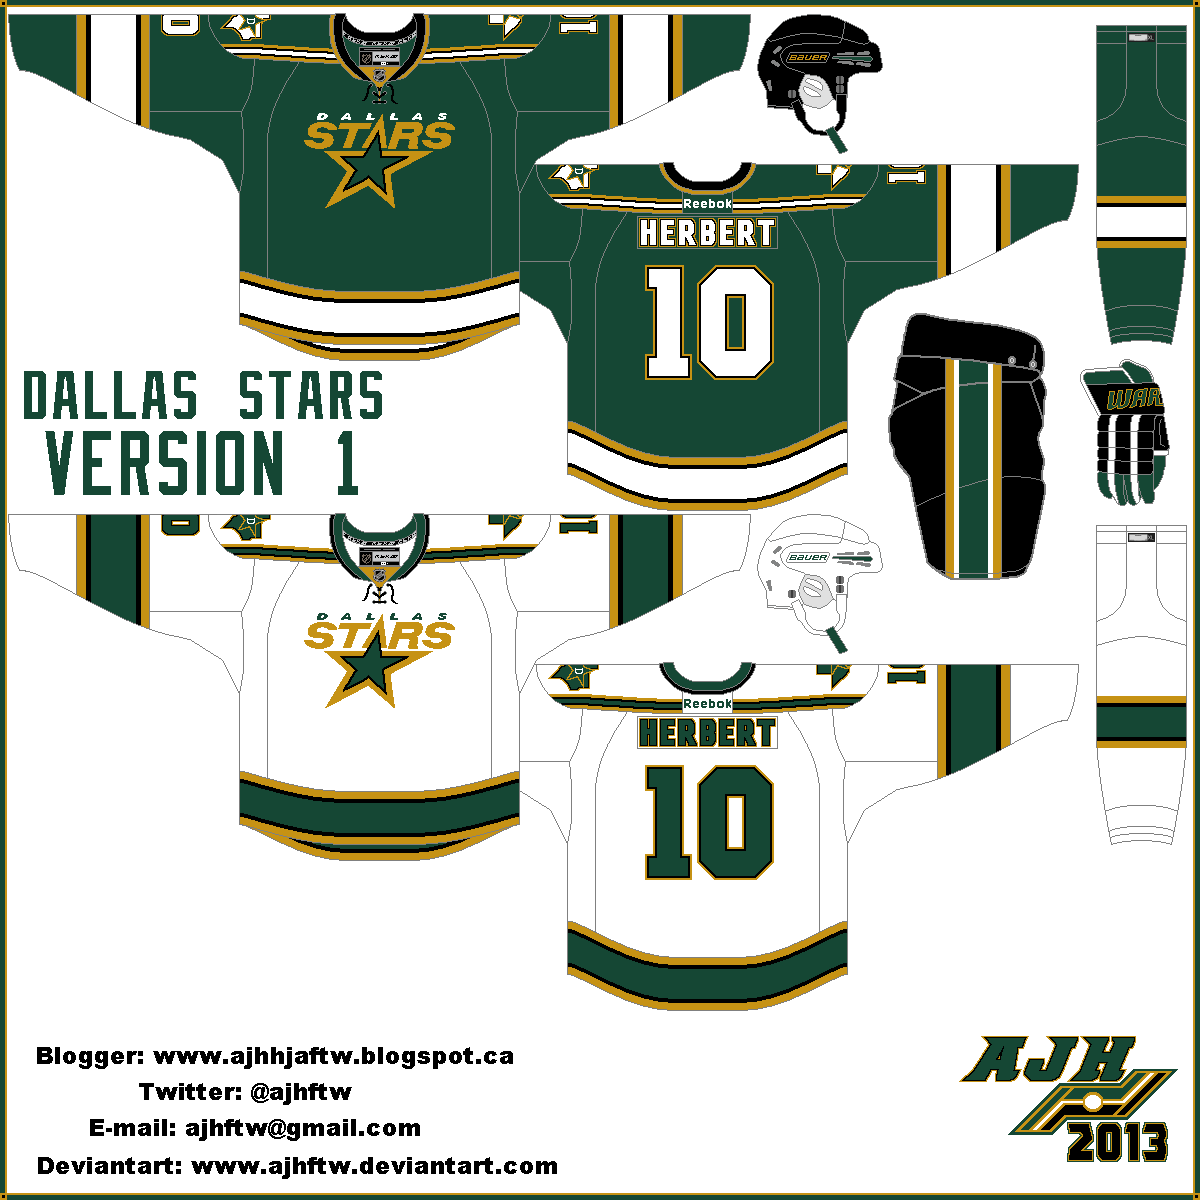 NHL Uniform Concepts on Behance  Dallas stars, Dallas stars hockey, Nhl  uniform